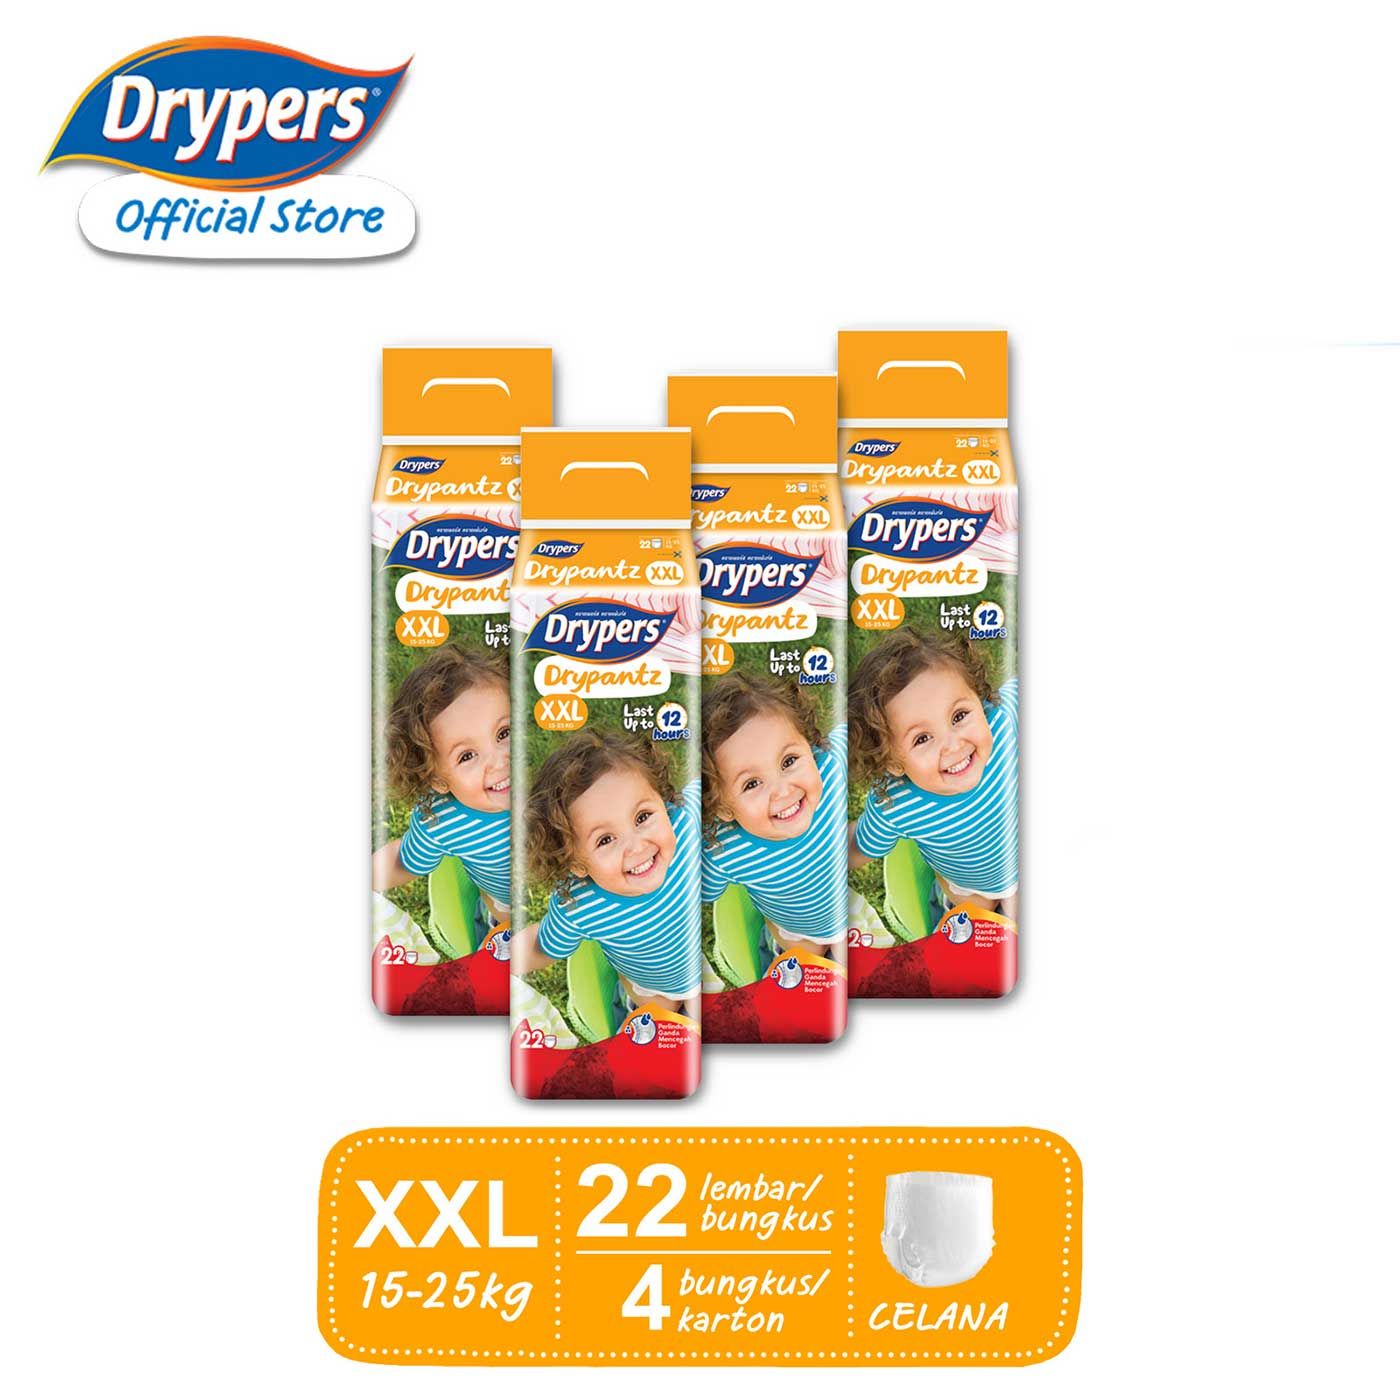 Drypers Drypantz Celana Popok - XXL 22 - 2